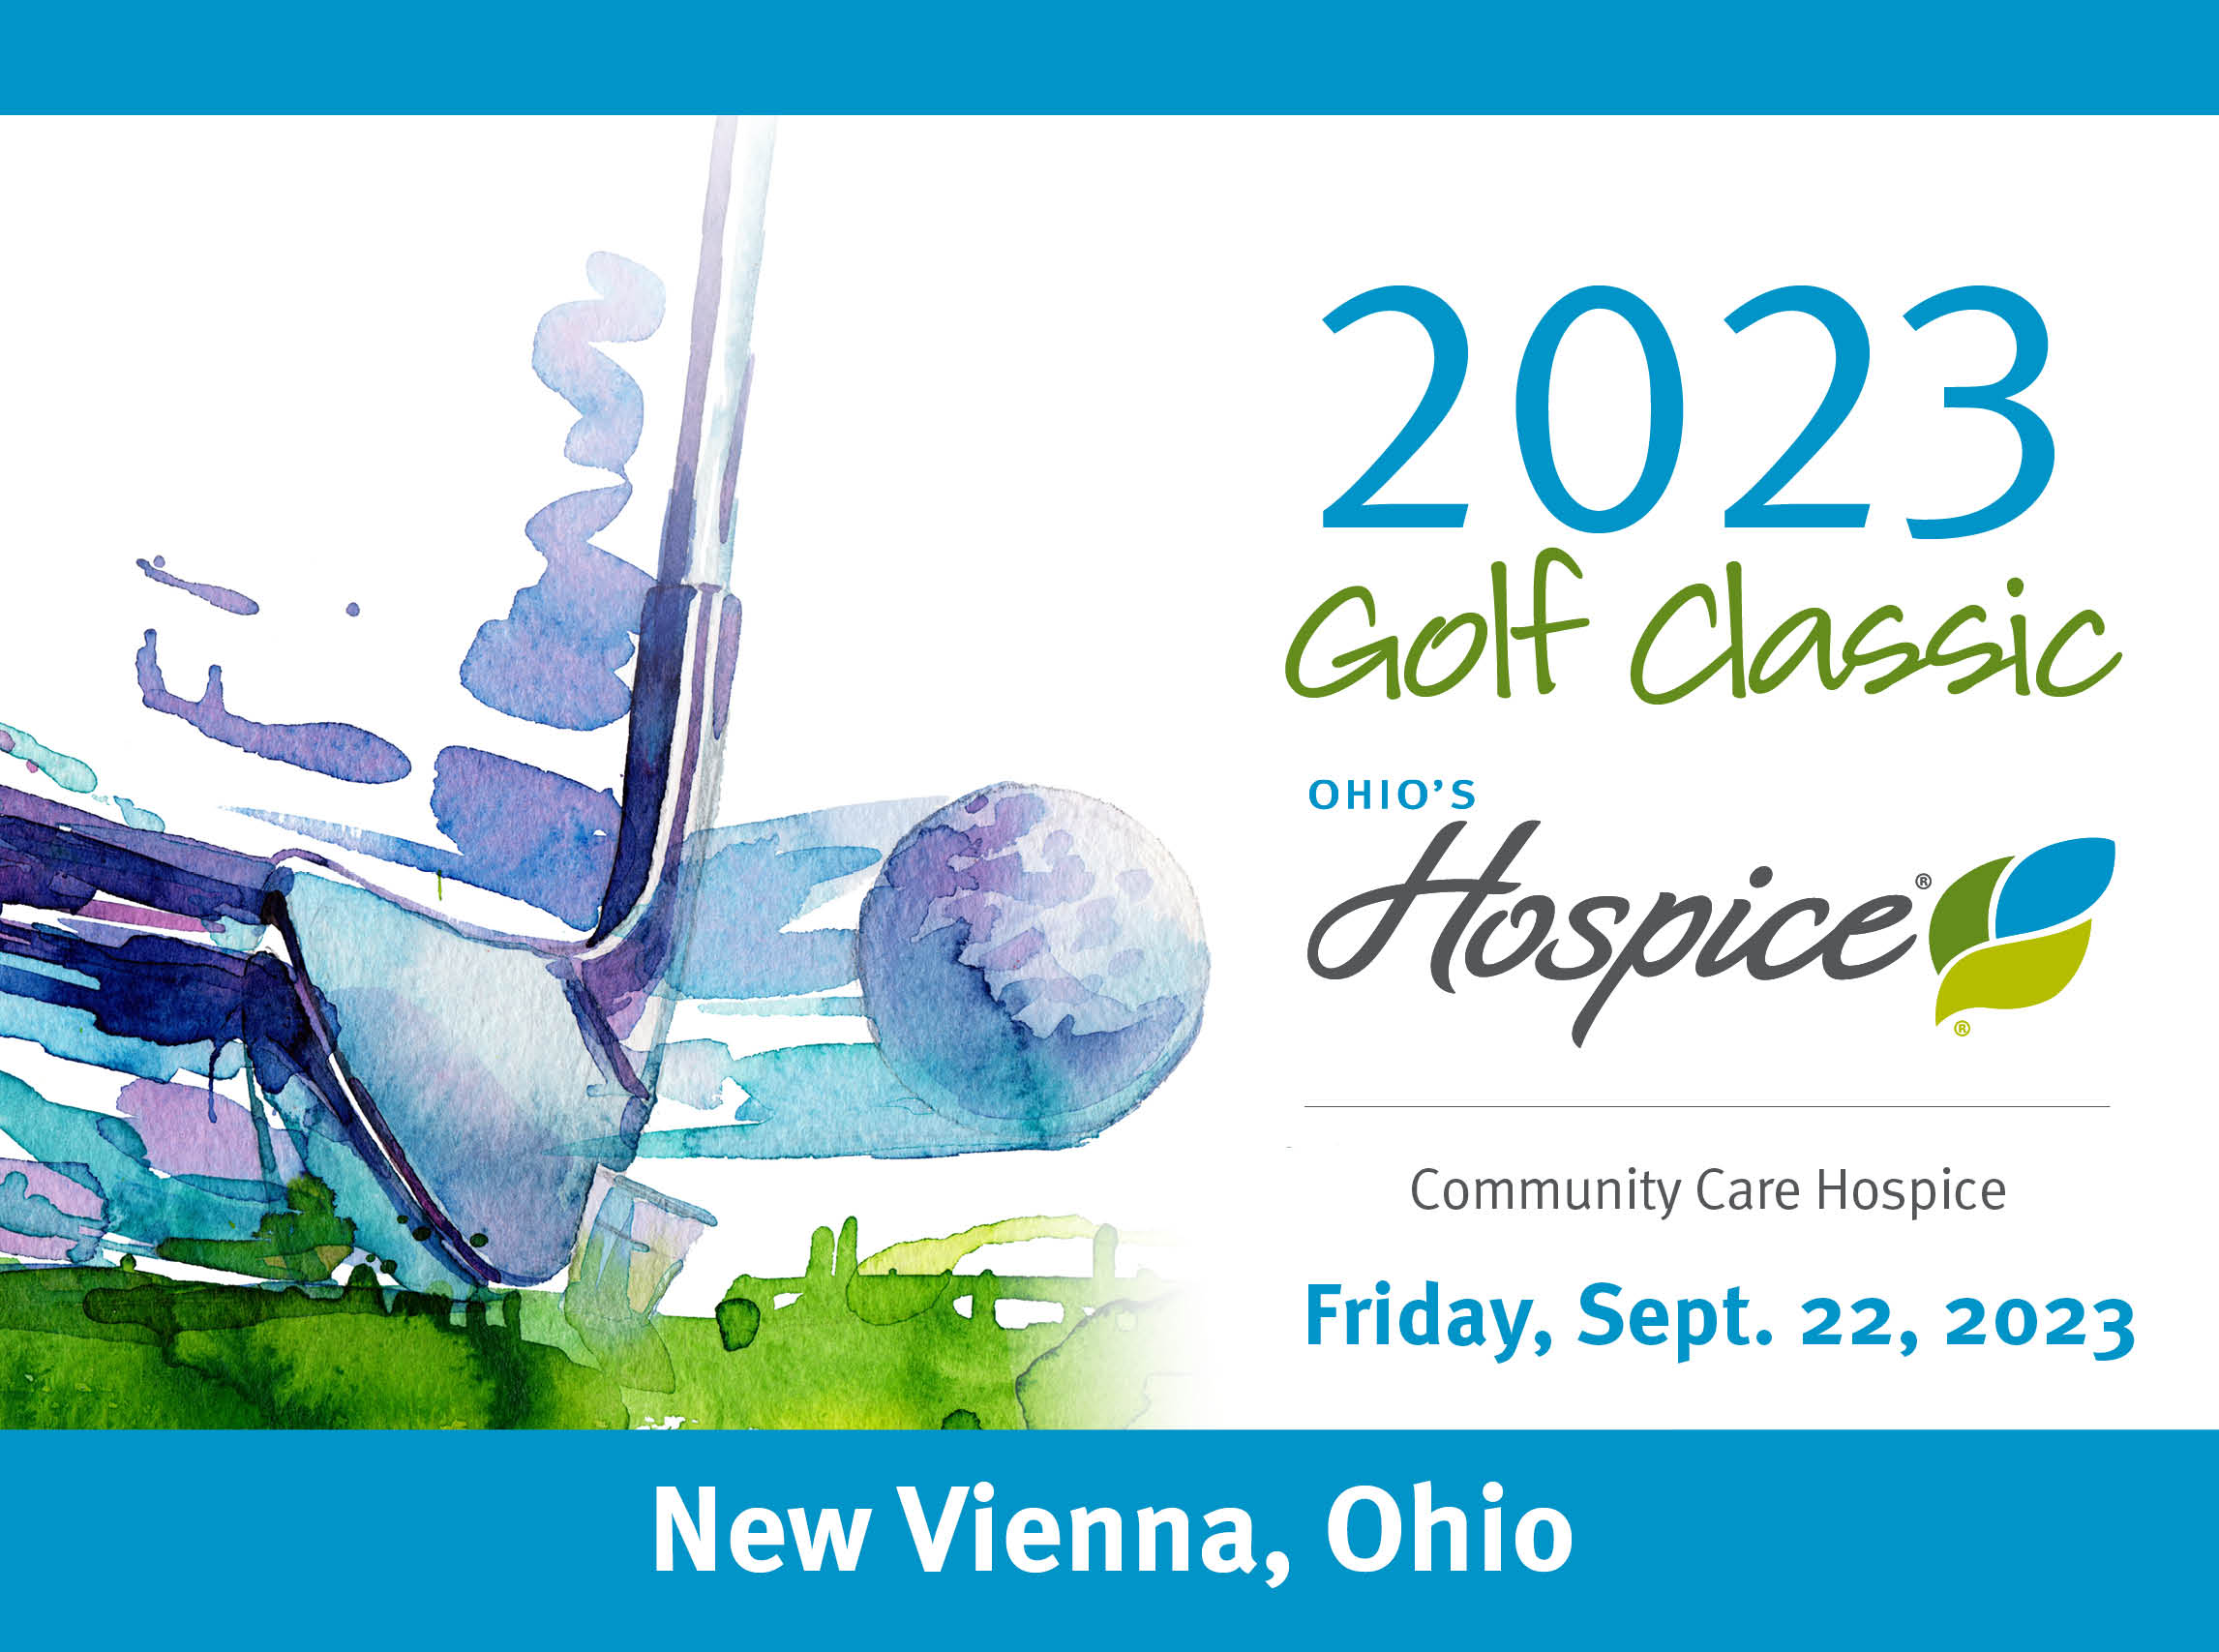 2023 Golf Classic Ohio's Hospice Community Care Hospice Friday, Sept. 22, 2023 New Vienna, Ohio